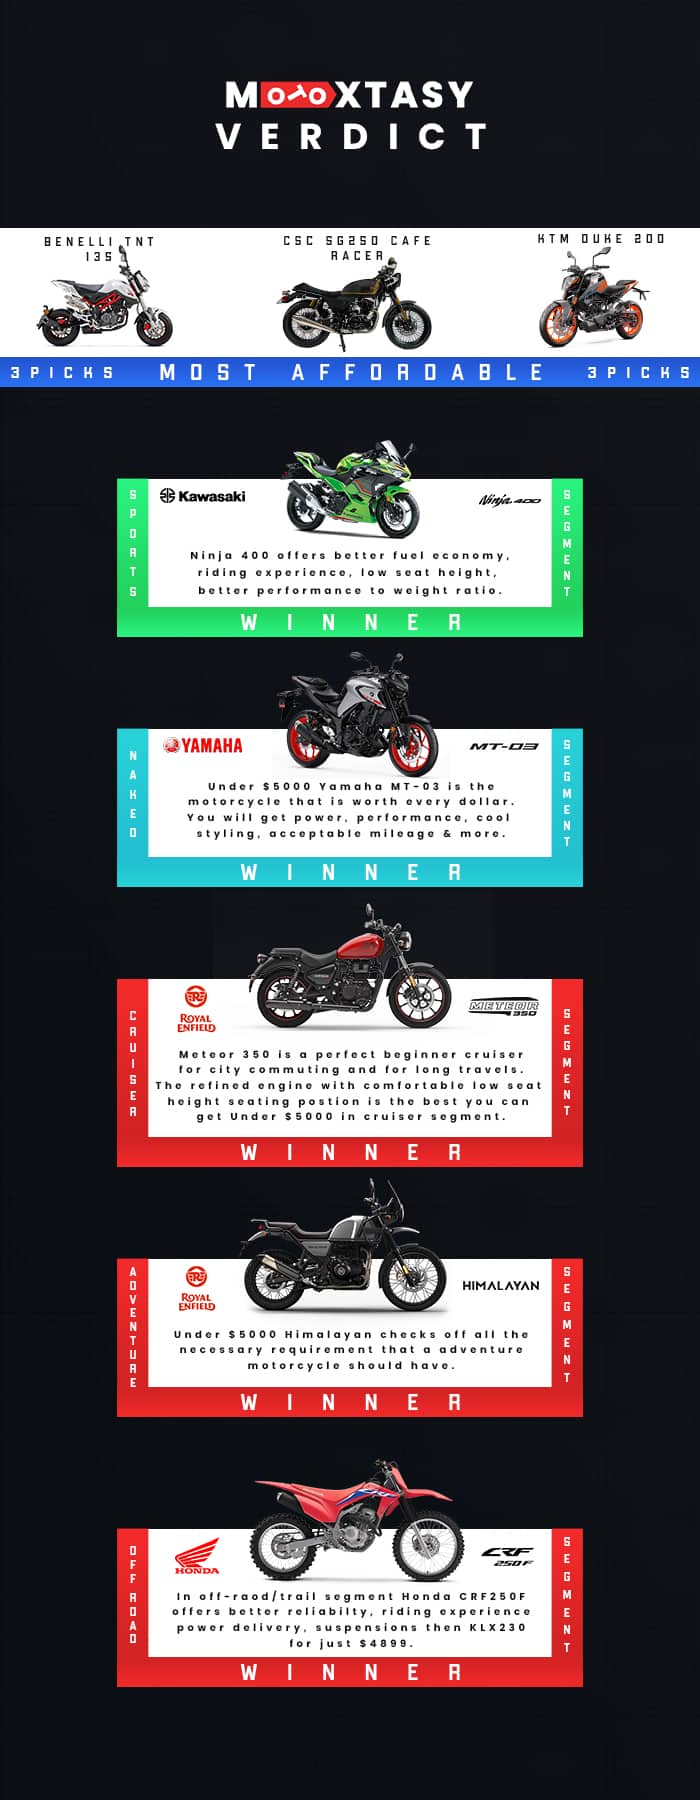 Top 20 Best Beginner Motorcycles Under 00 In Each Segment